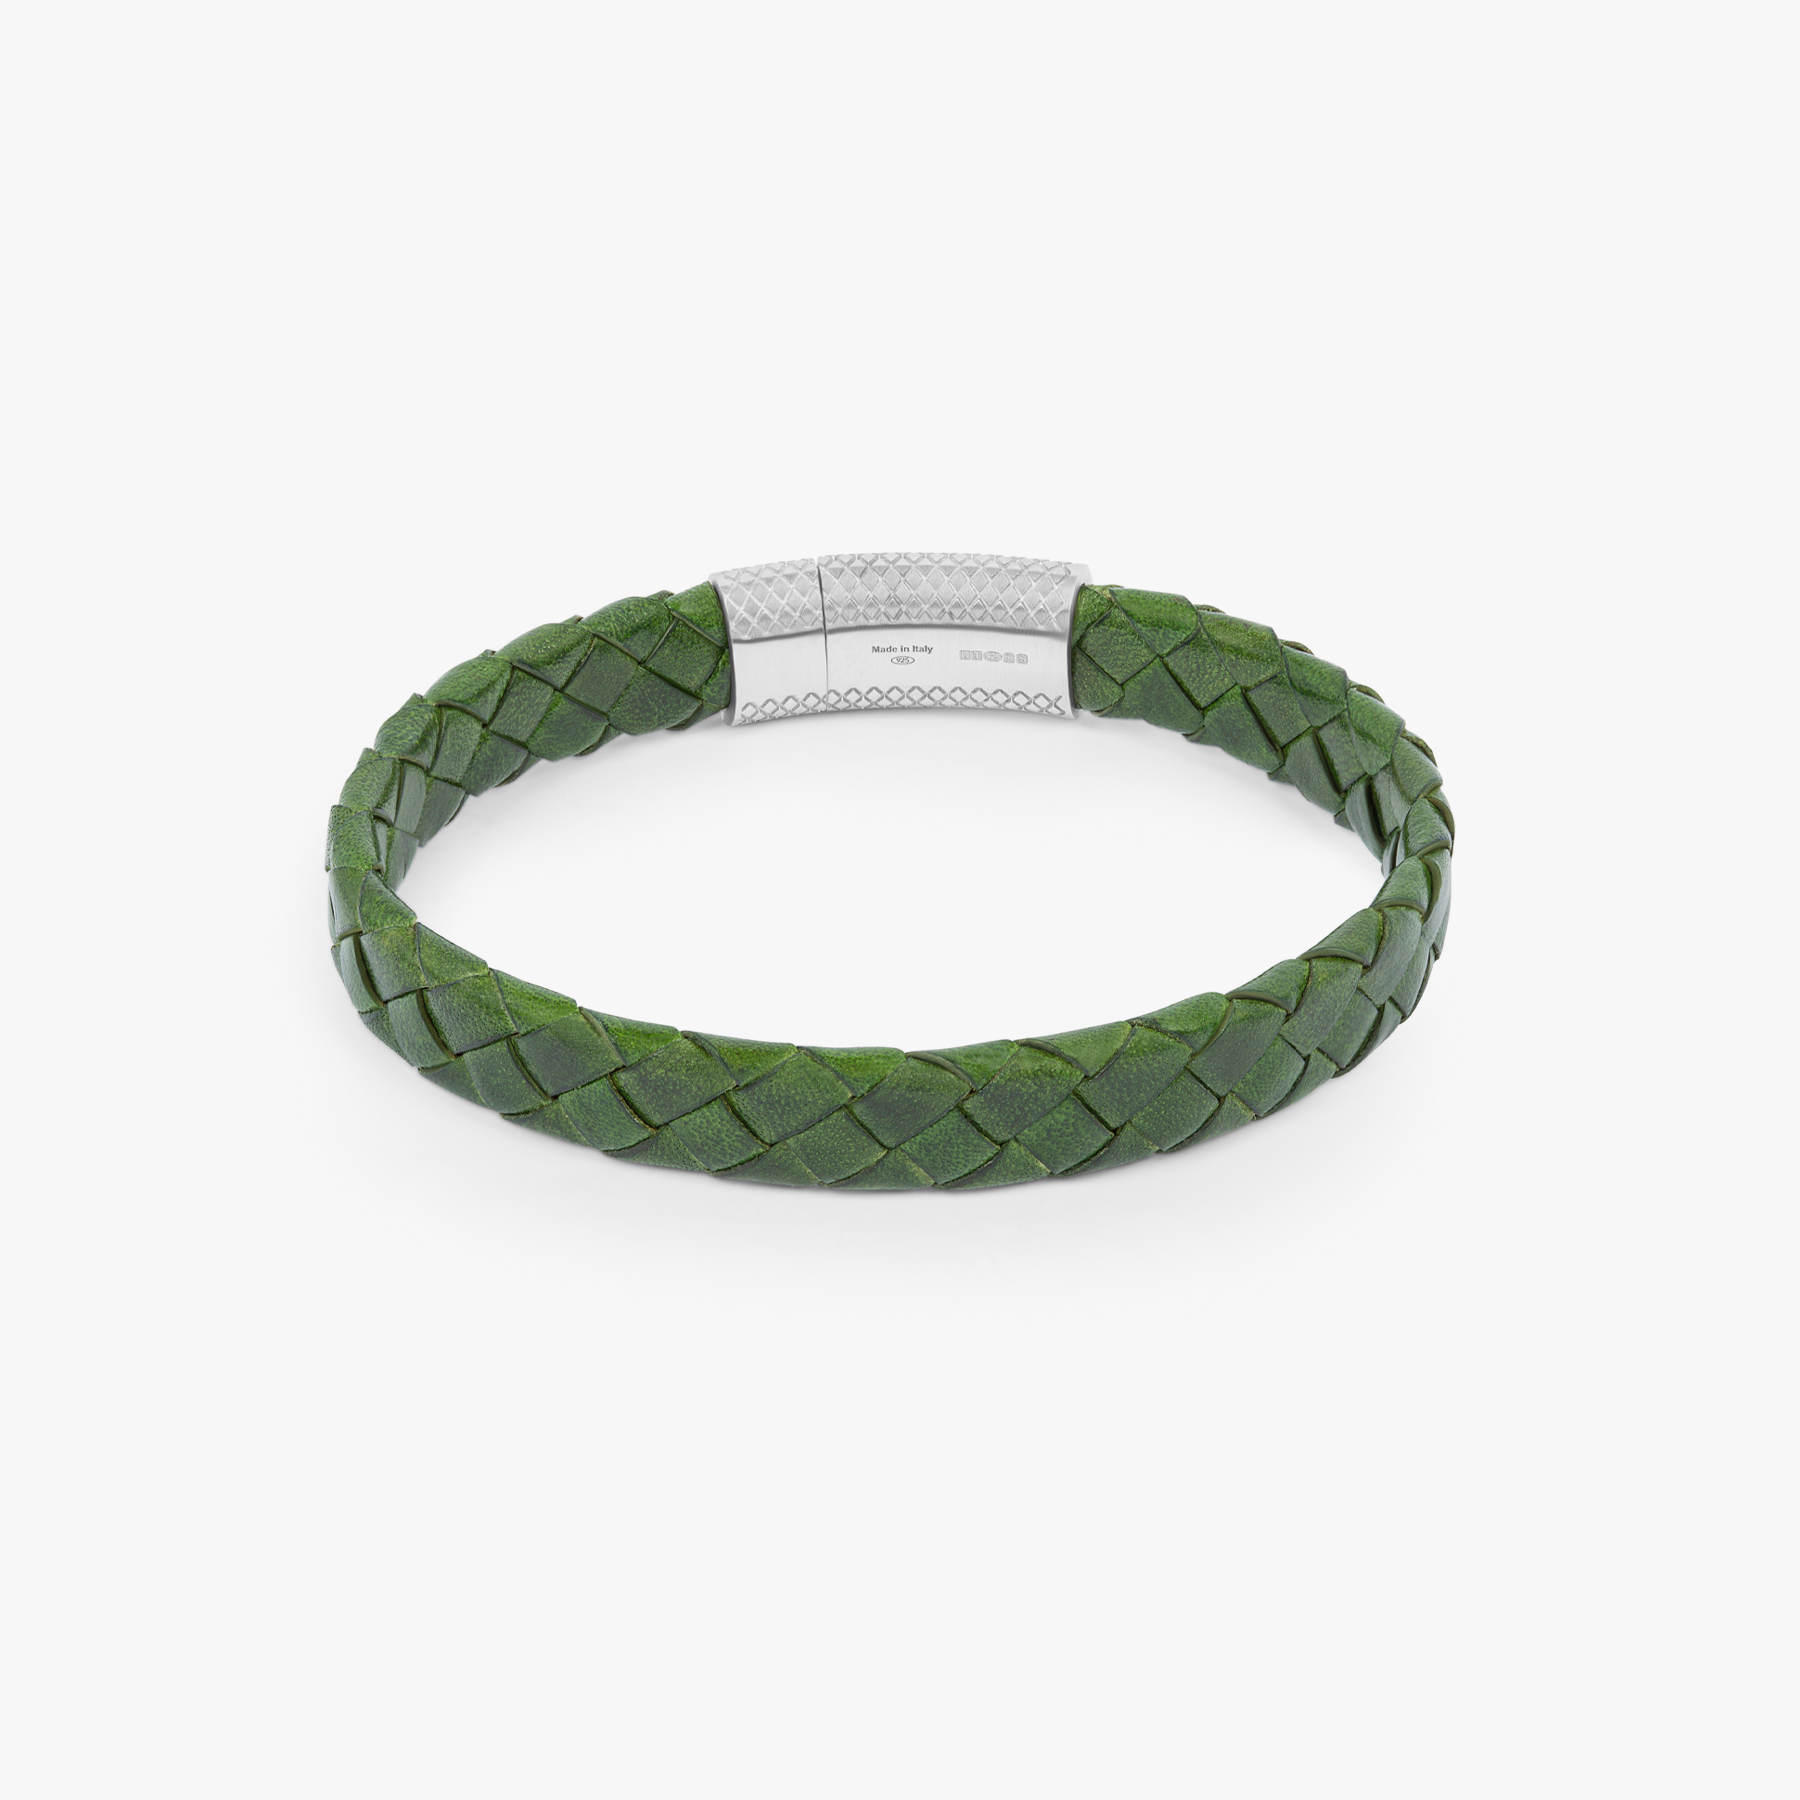 TATEOSSIAN London Dark Green Leather Bracelet with Stainless-steel cla